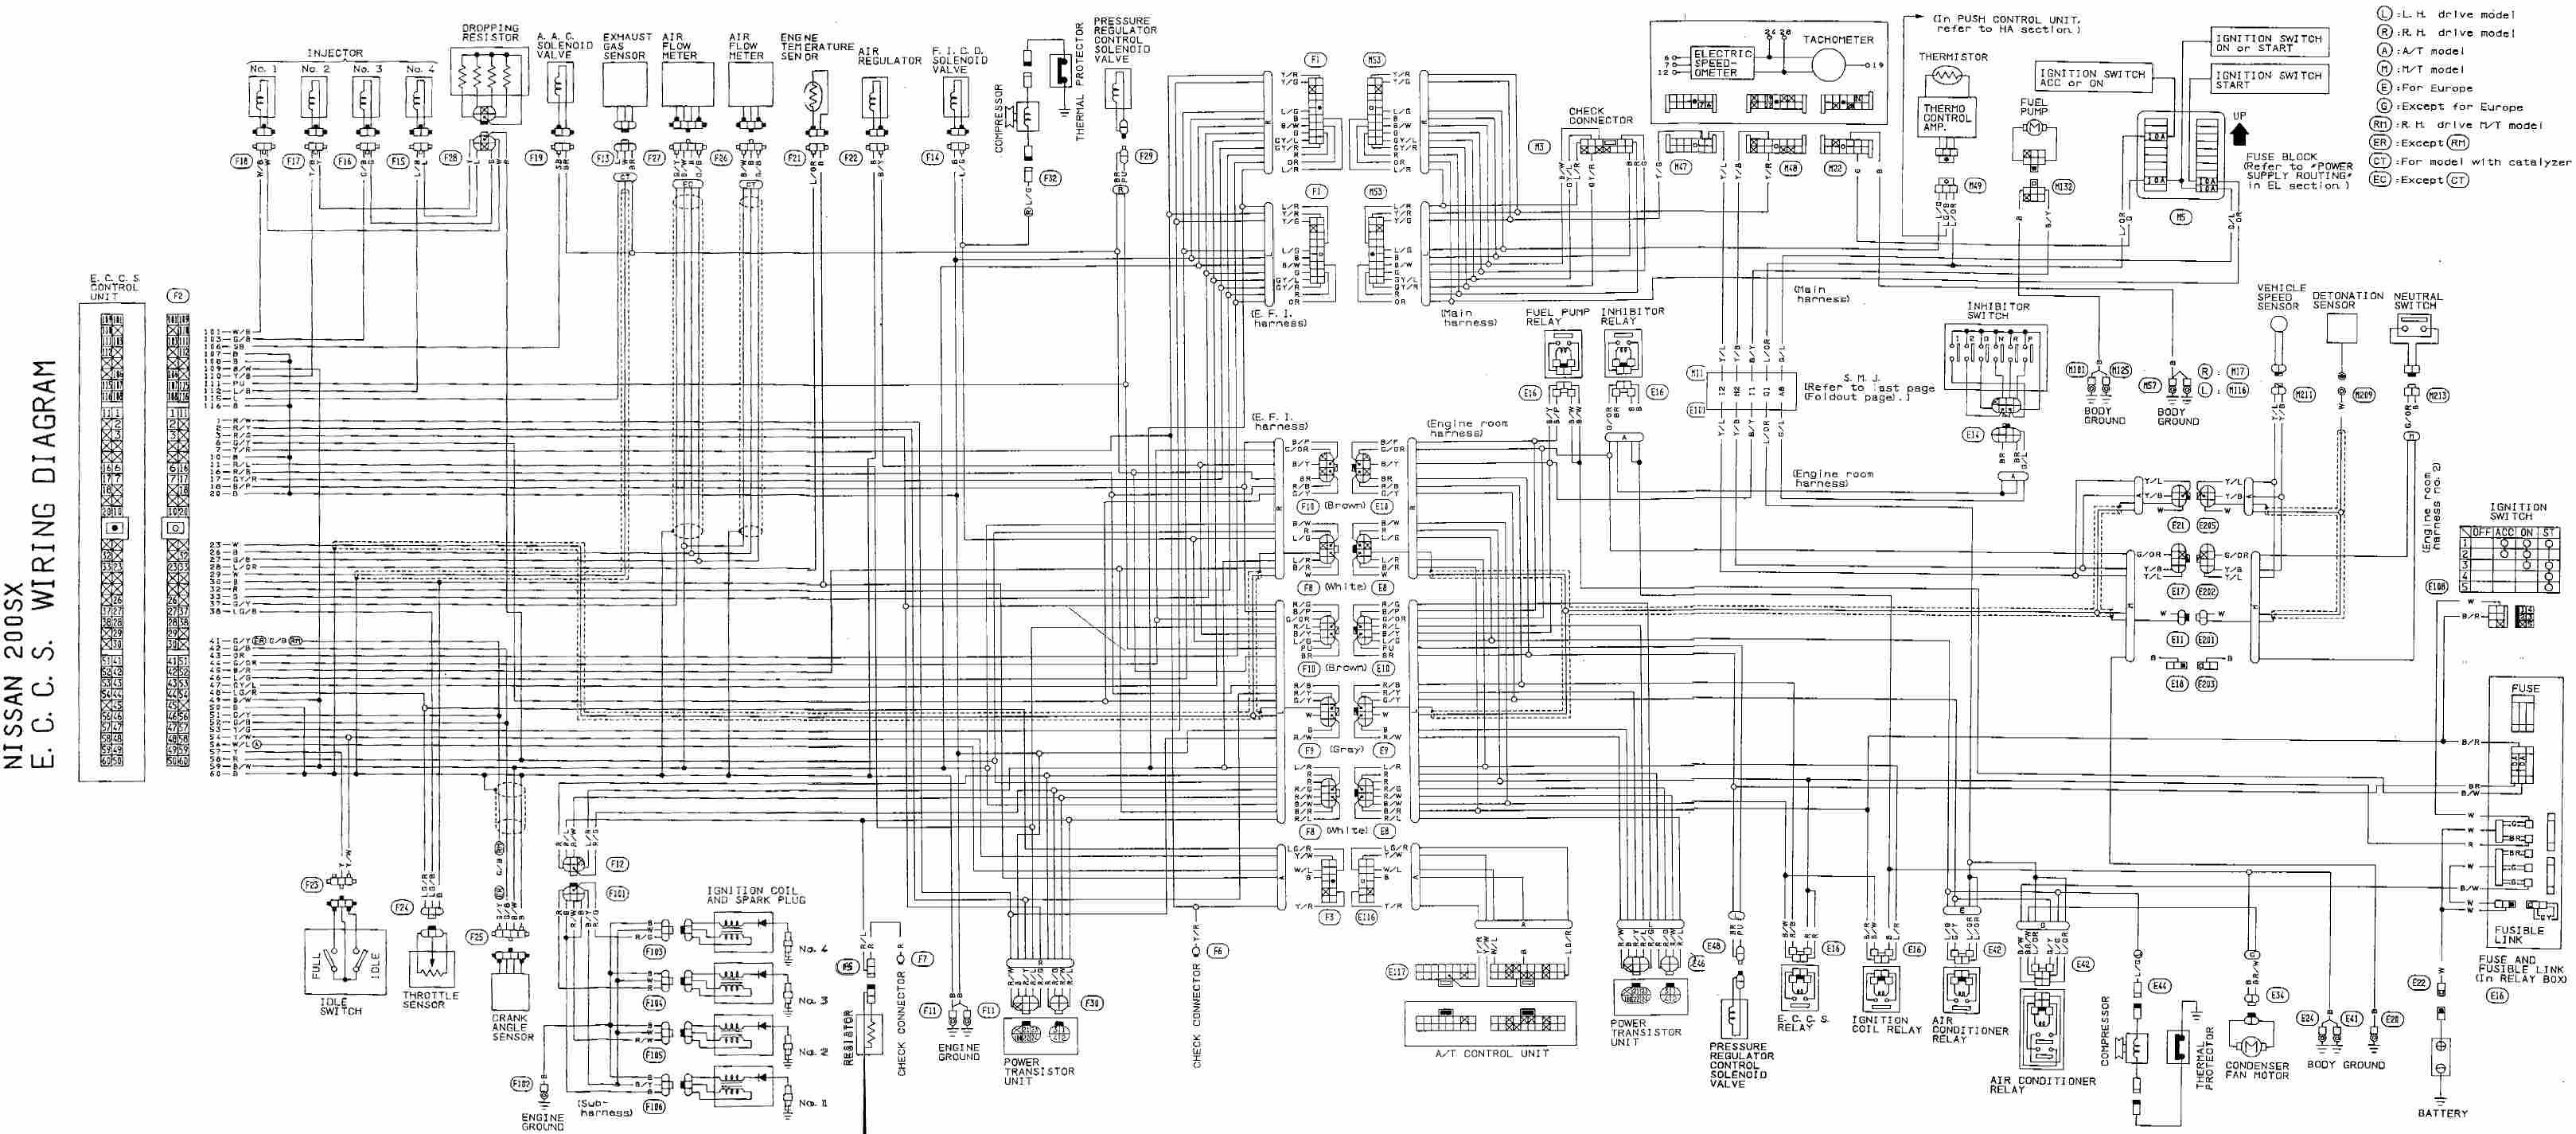 Sr20det Engine Diagram Eccs Sr20det Nissan Wiring Diagram 2013 Automotive Wiring Diagrams